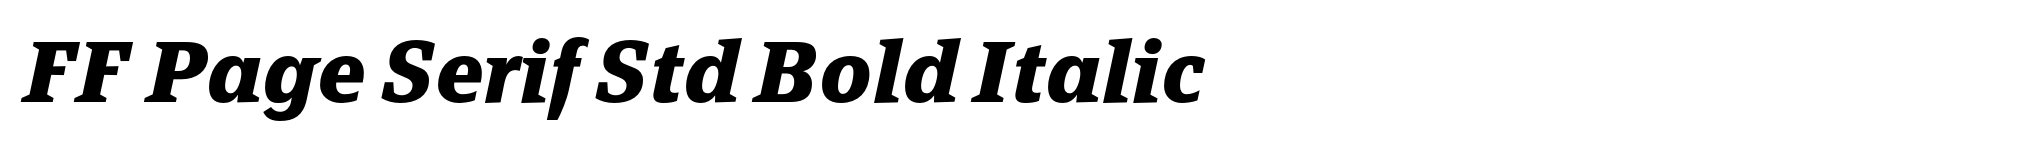 FF Page Serif Std Bold Italic image